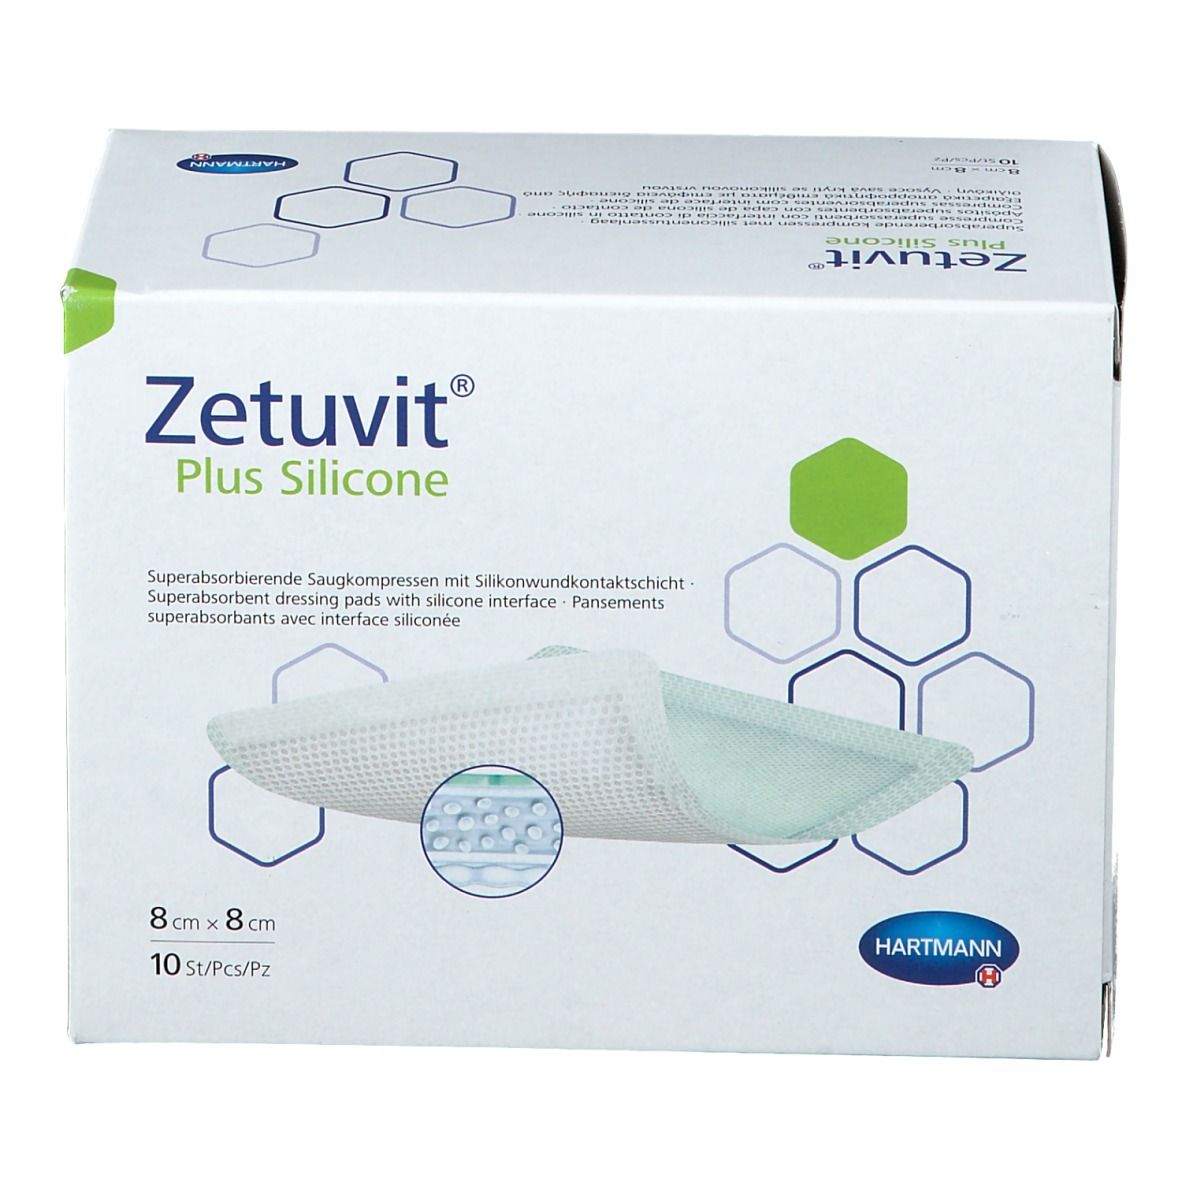 Zetuvit® Plus Silicone steril 8 cm x 8 cm